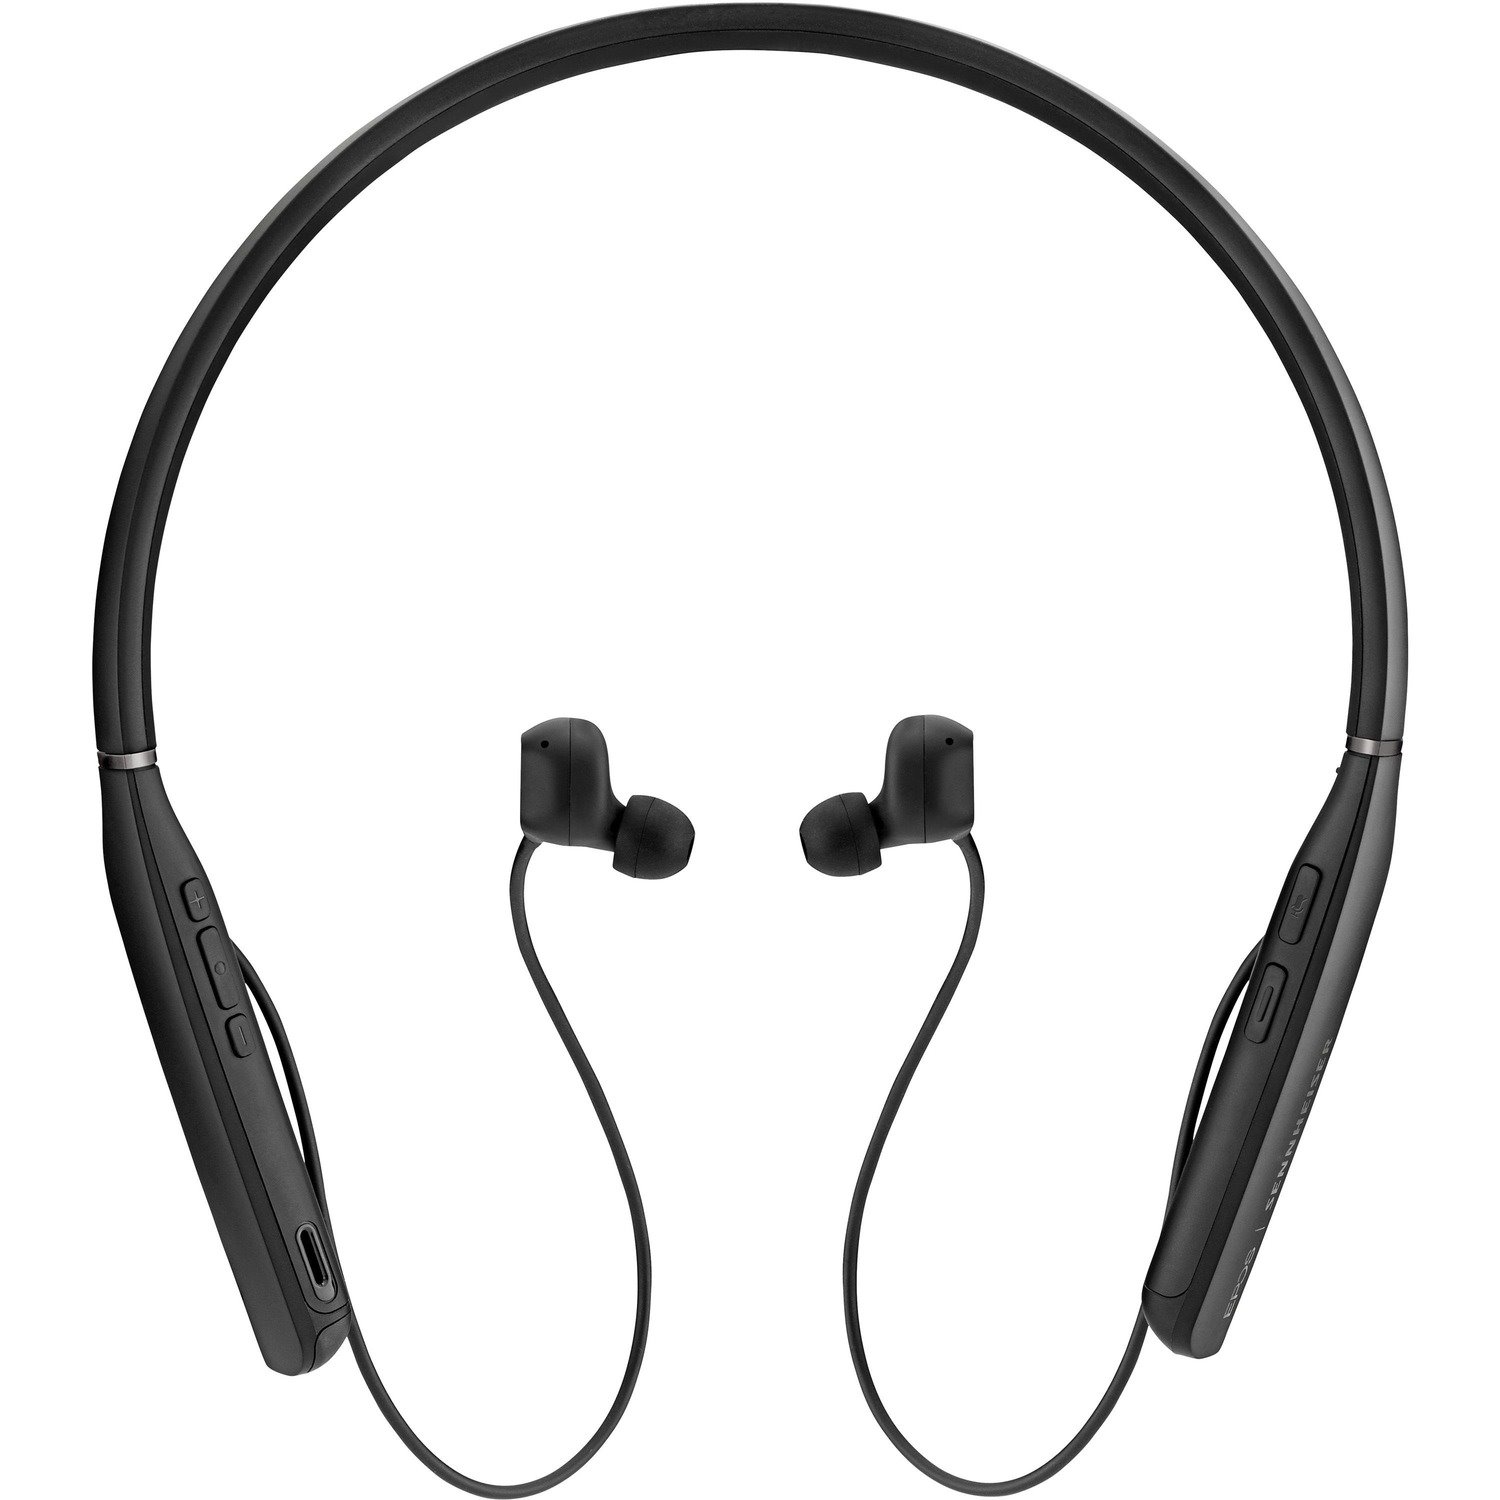 EPOS | SENNHEISER ADAPT 461 Wireless Behind-the-neck Stereo Earset - Black, Silver